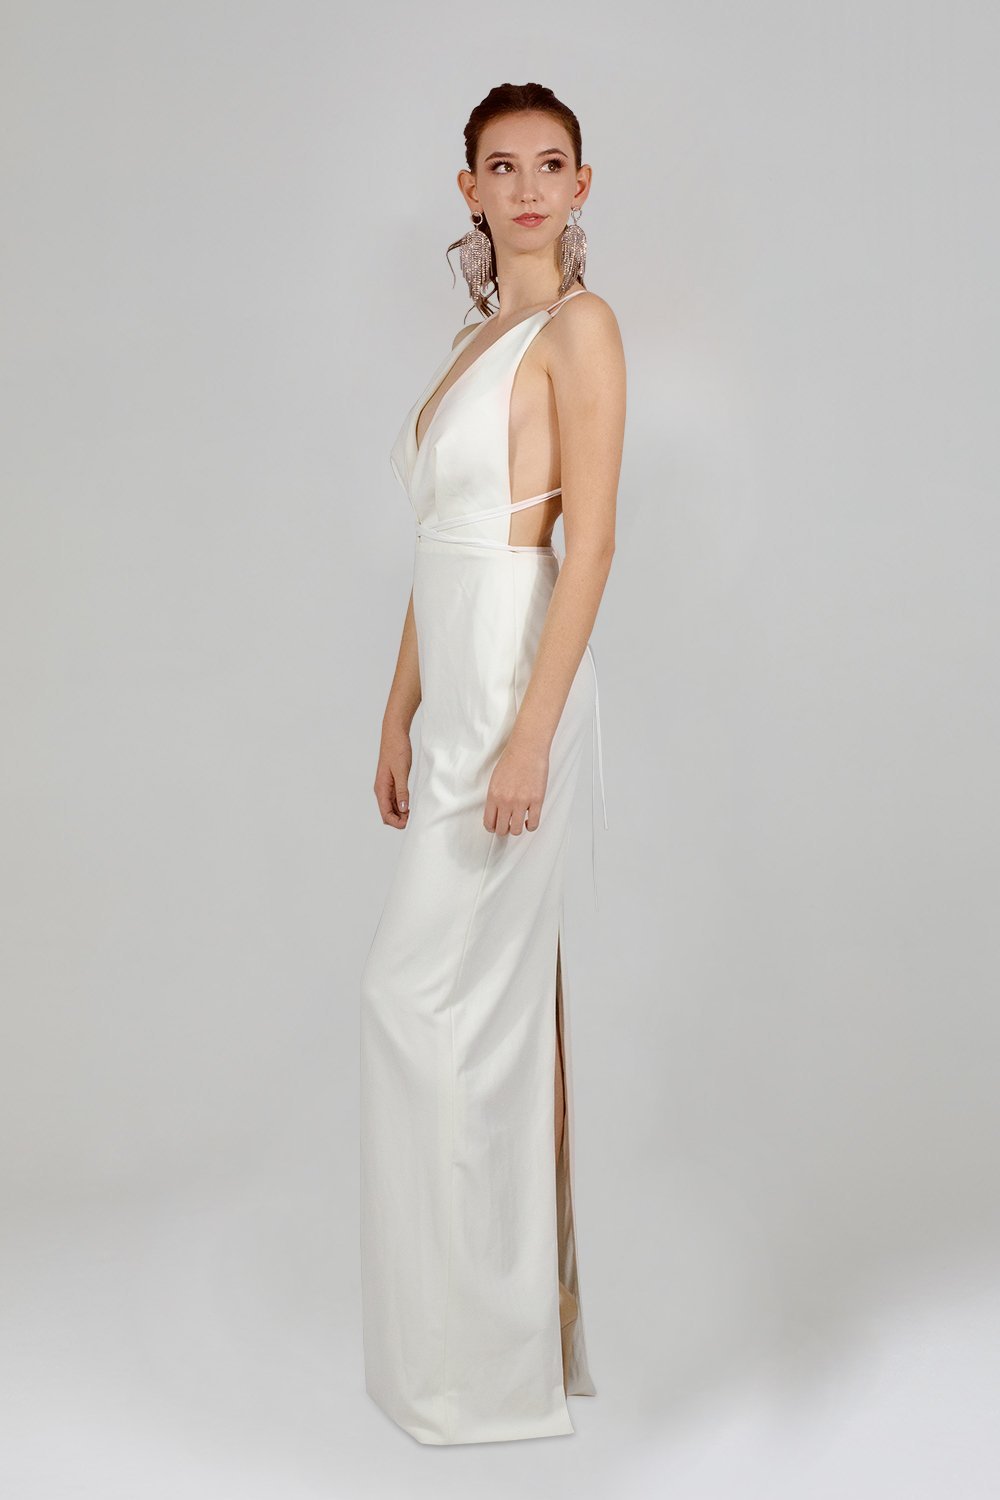 custom made white formal ball dresses perth australia envious bridal & formal